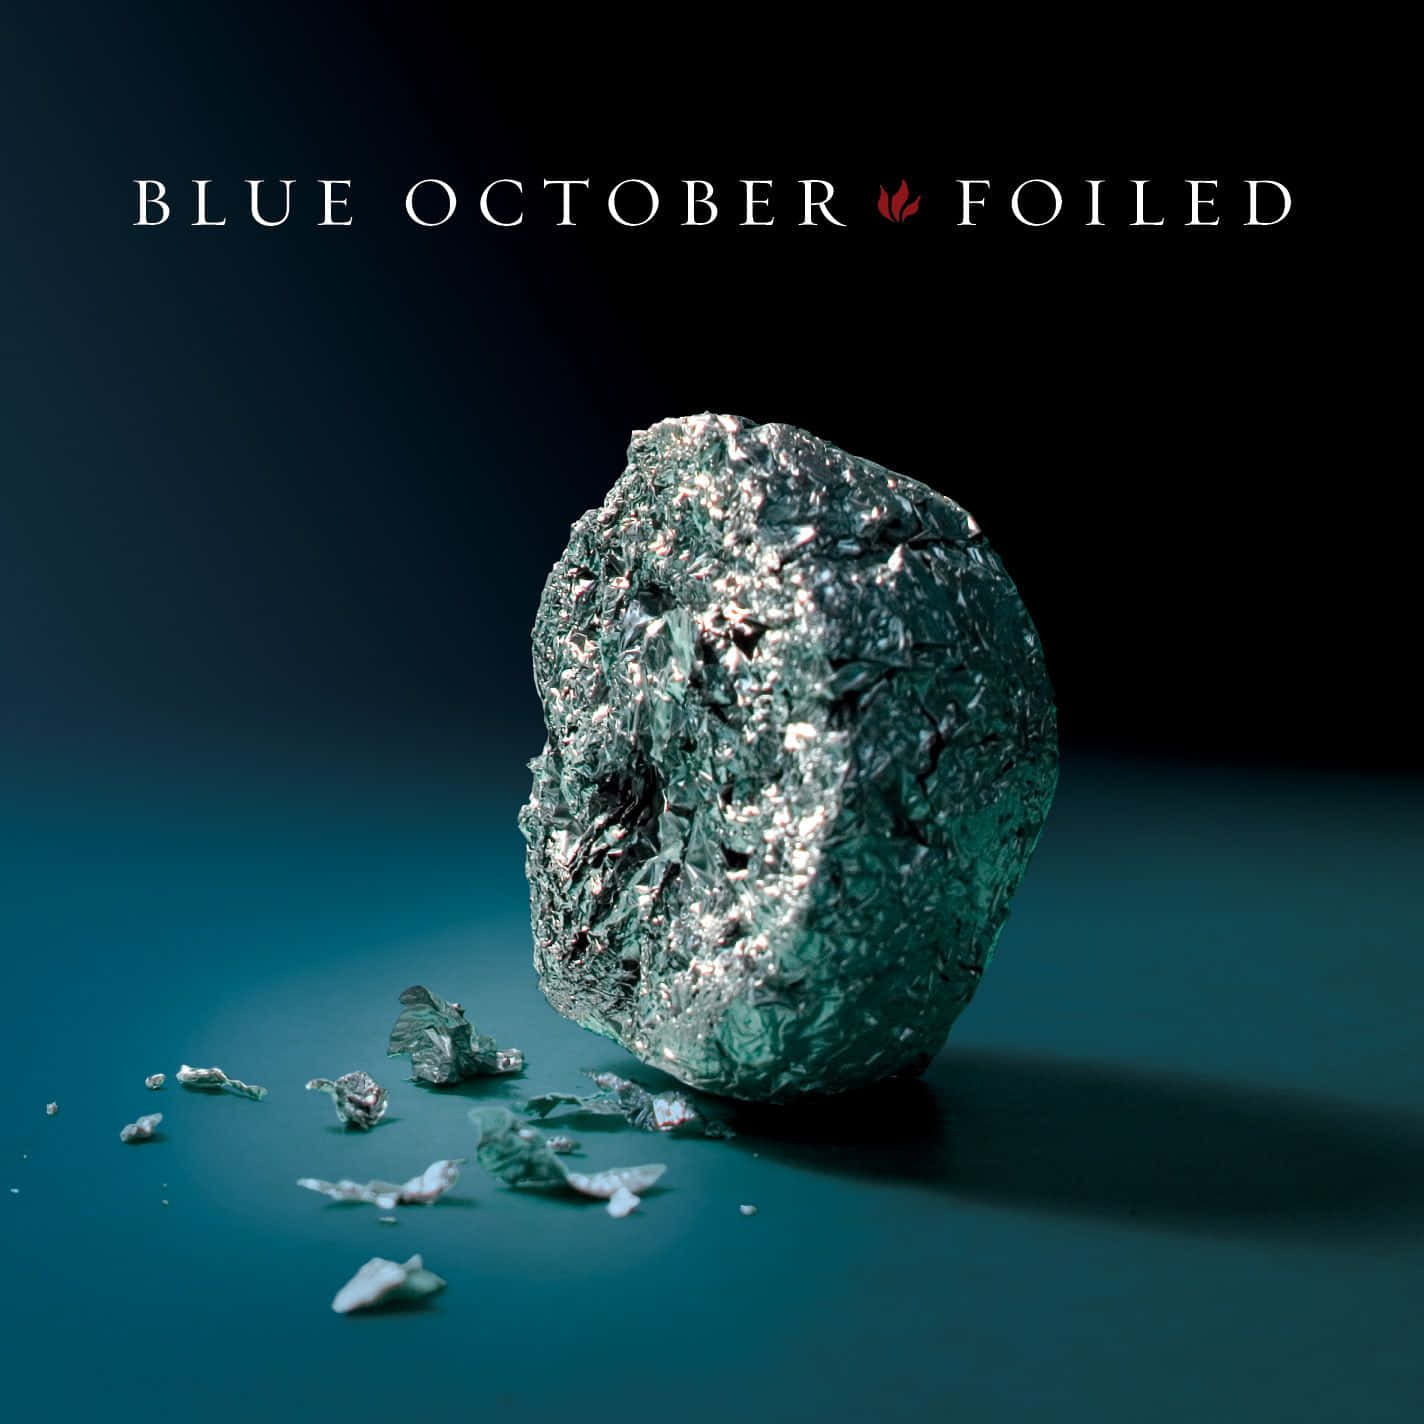 Blue October - Band Wallpaper